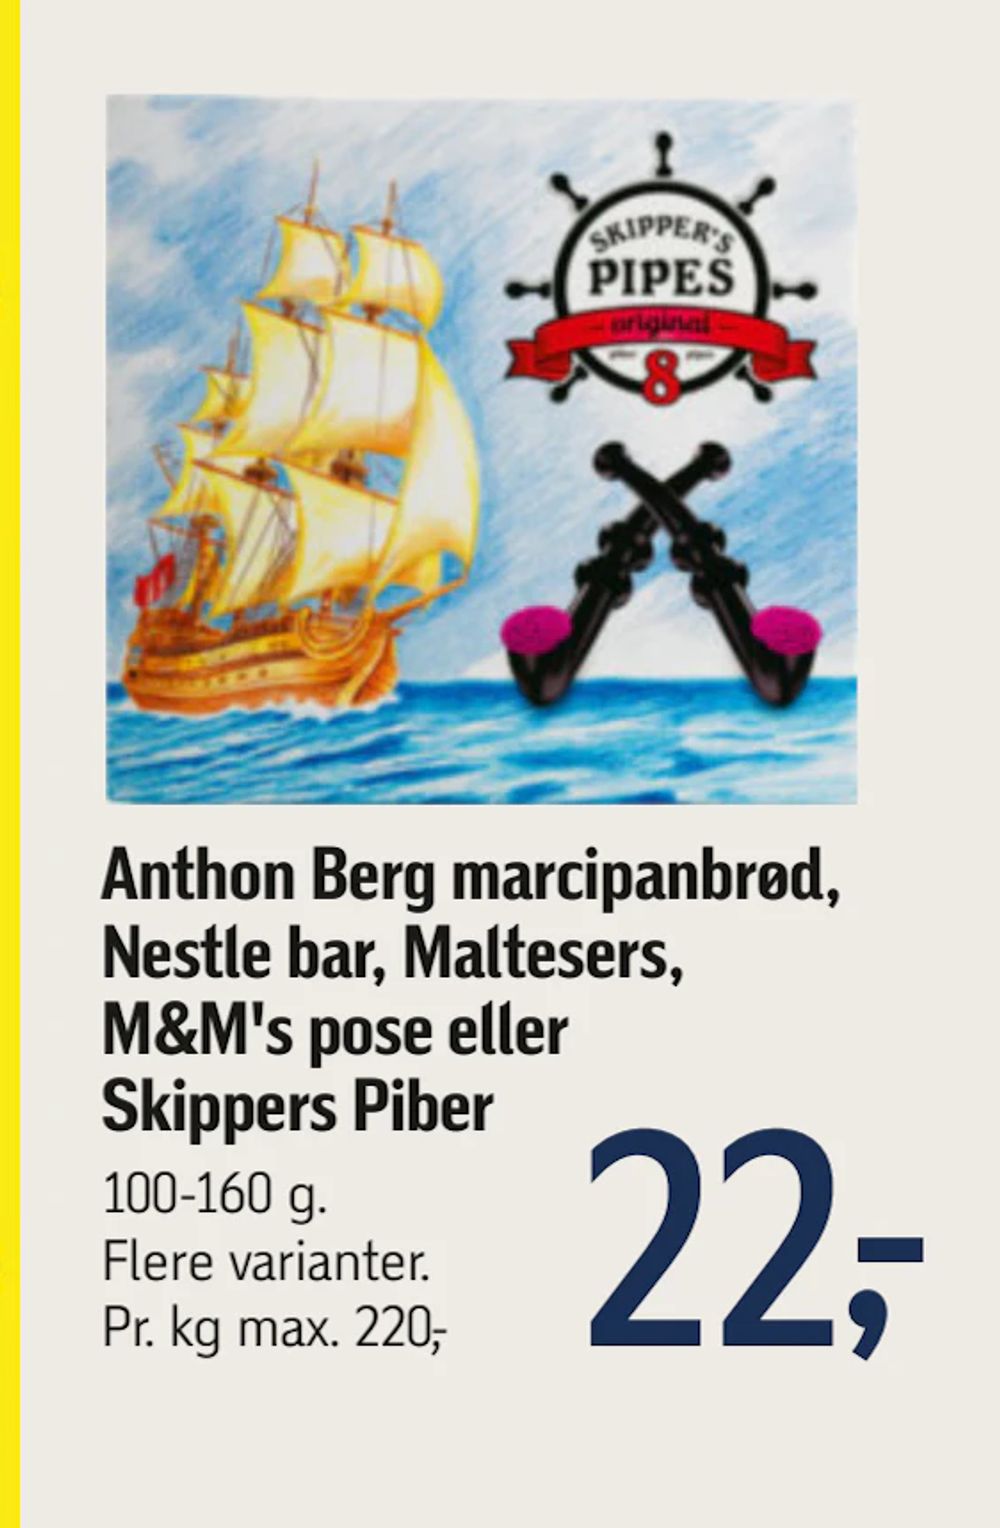 Tilbud på Anthon Berg marcipanbrød, Nestle bar, Maltesers, M&M's pose eller Skippers Piber fra føtex til 22 kr.